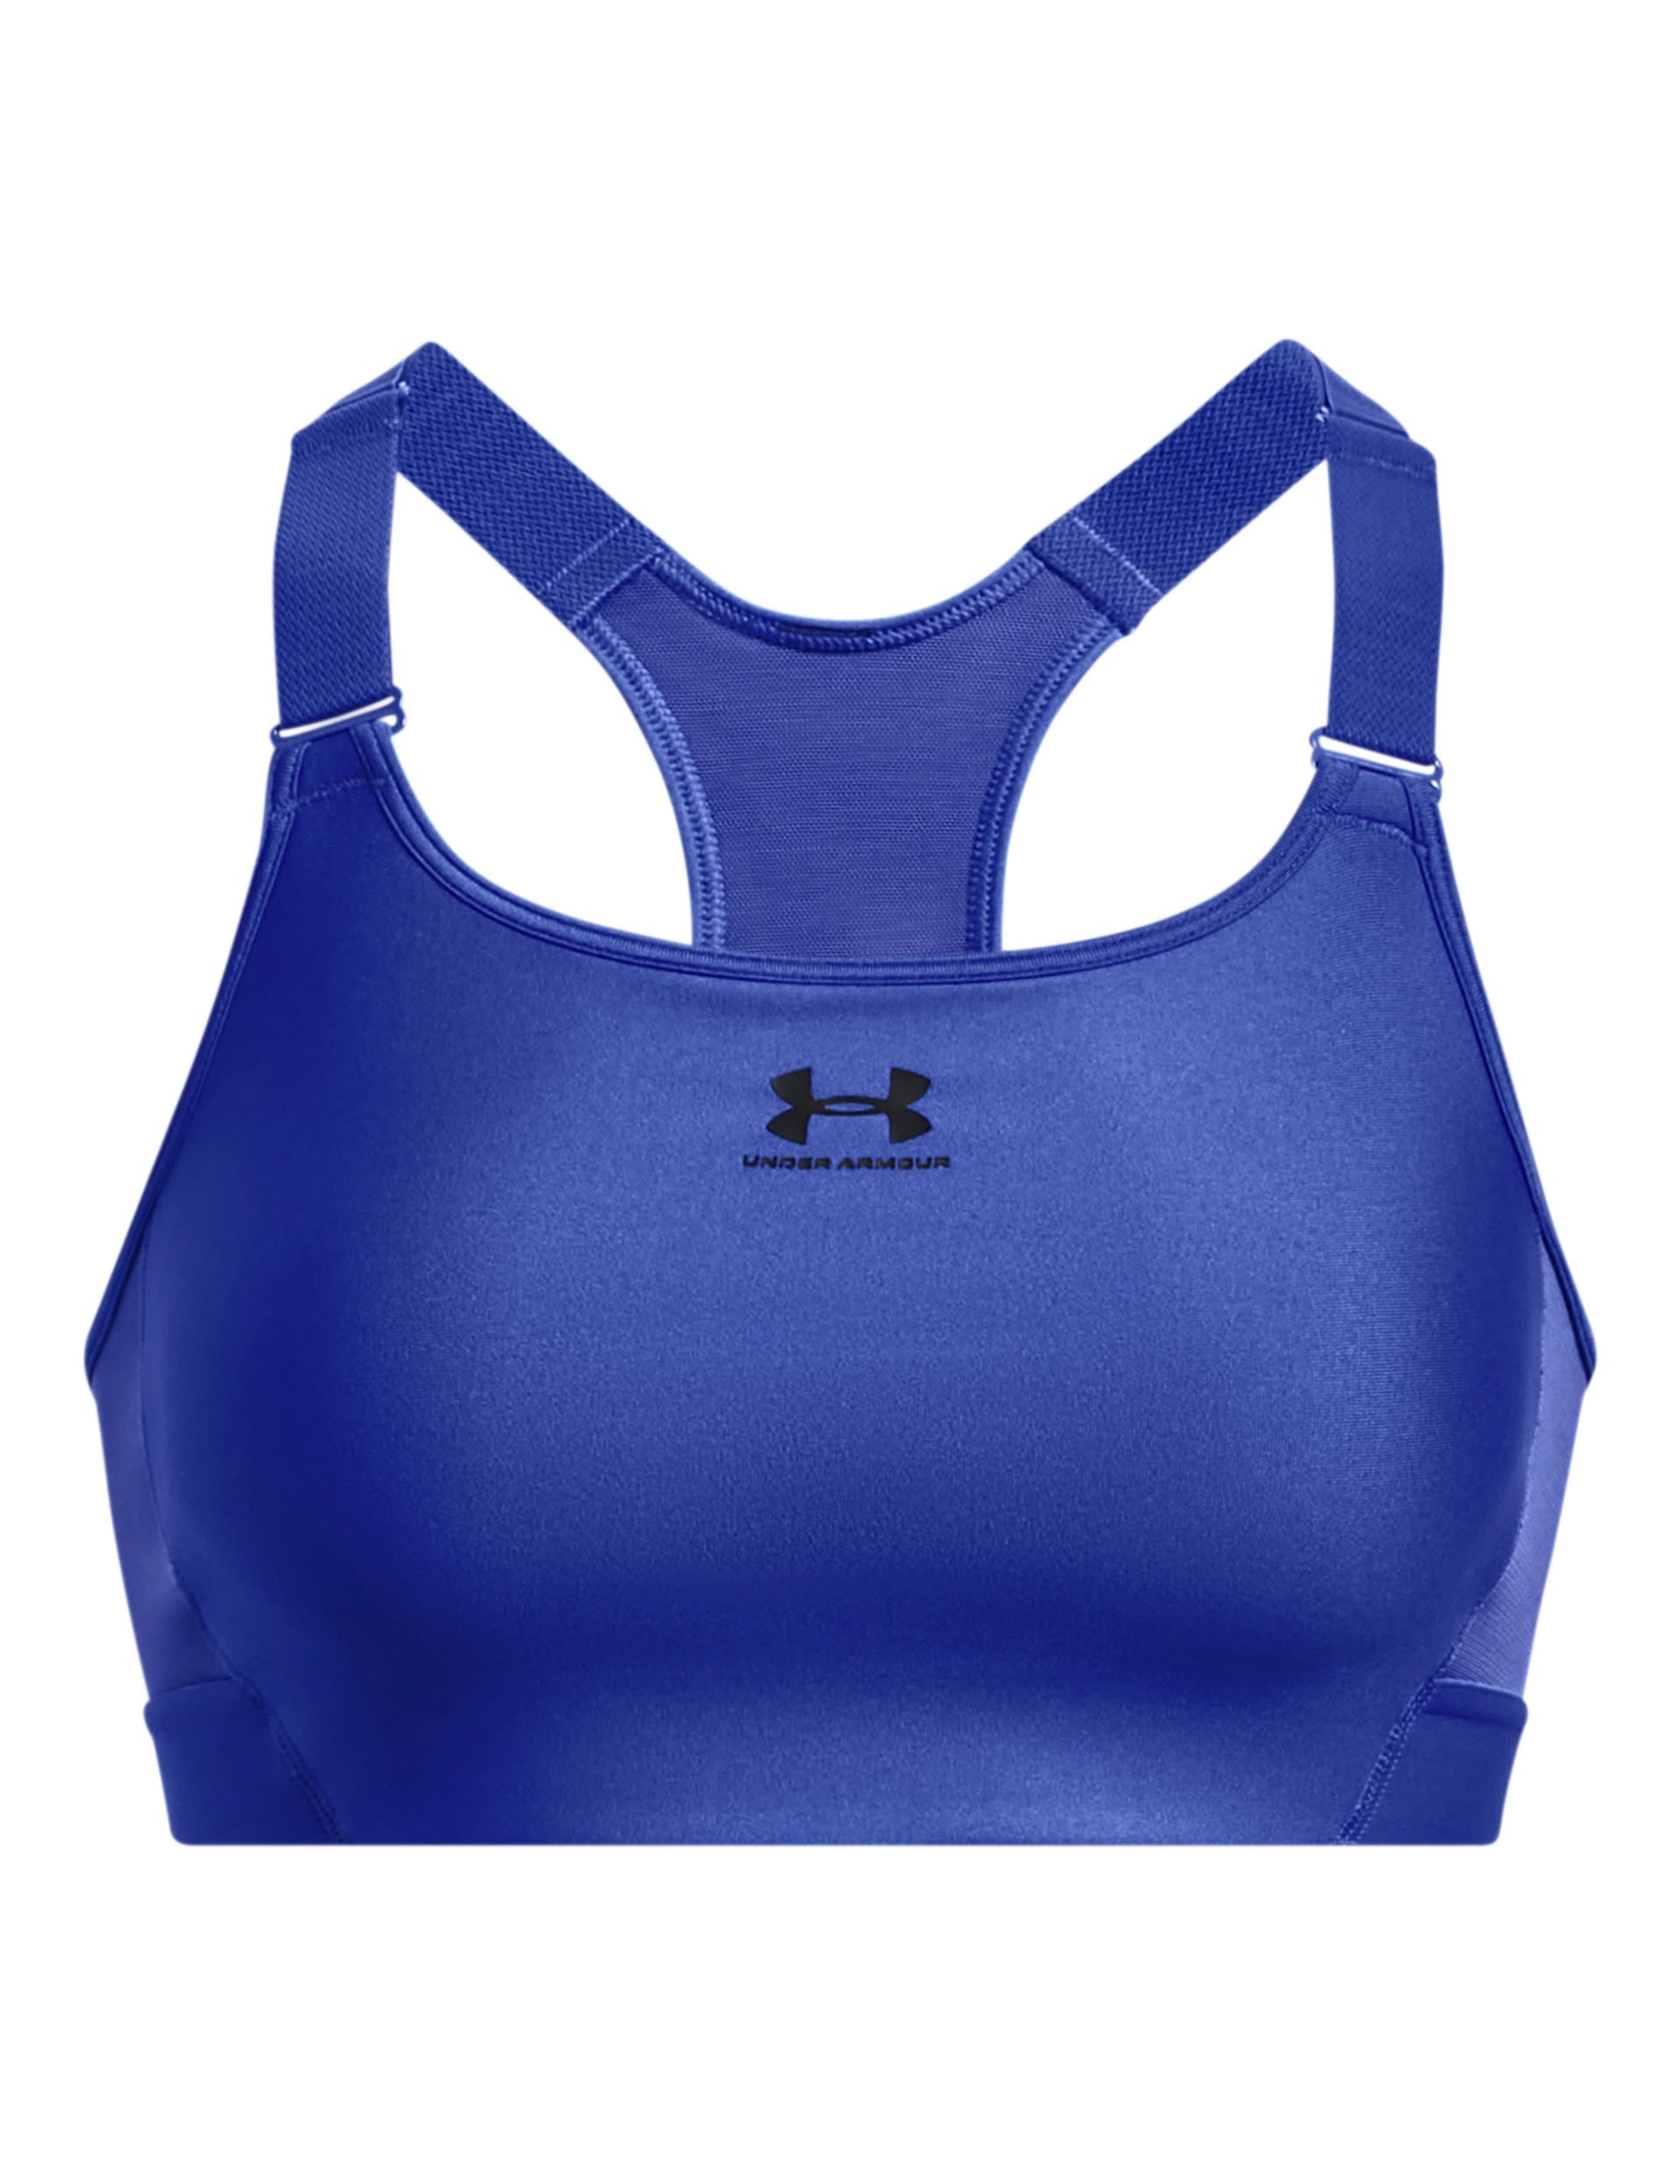 Under Armour Women's High Impact Sports Bra Size 32DD - $35